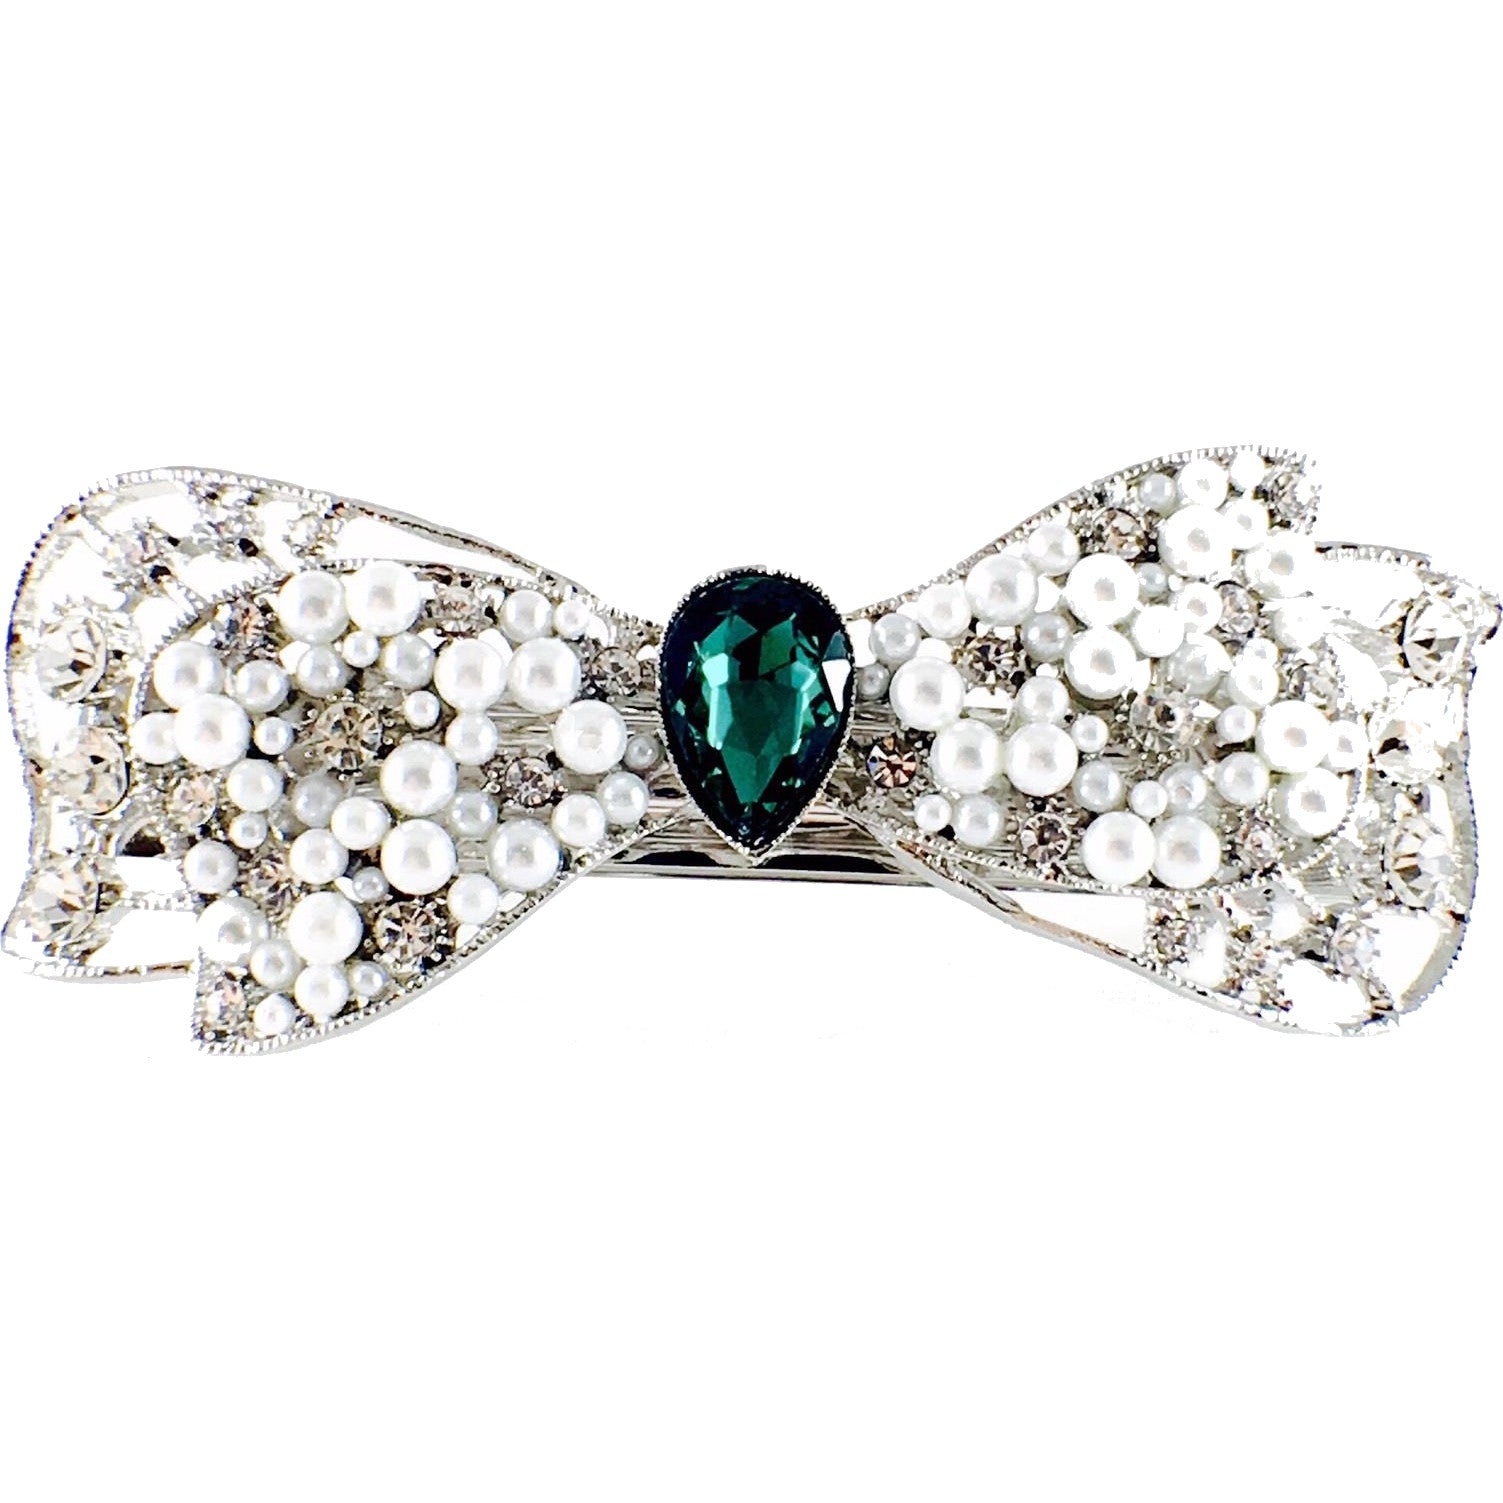 Bow Knot Barrette Rhinestone Crystal silver base white pearls Clear Green, Barrette - MOGHANT